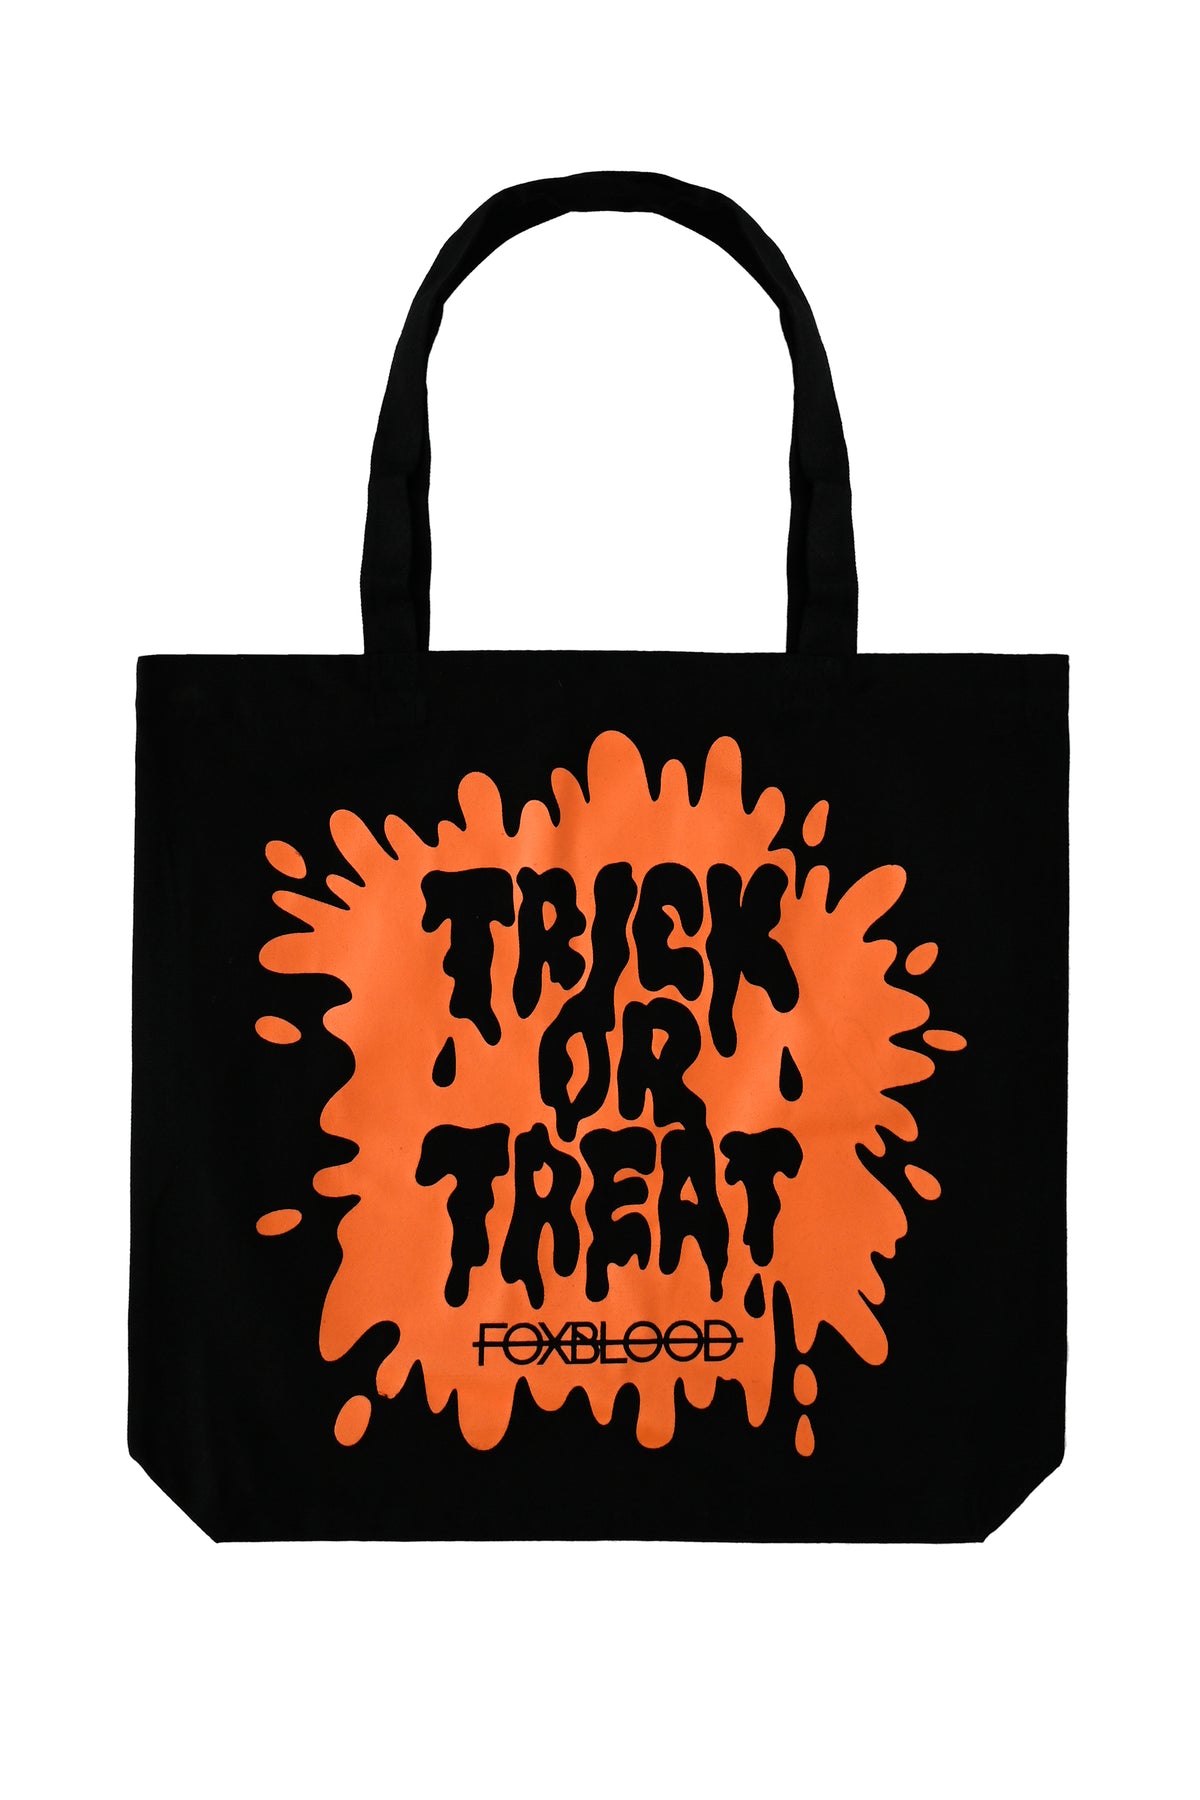 black tote back with orange "trick or treat" splat and foxblood logo